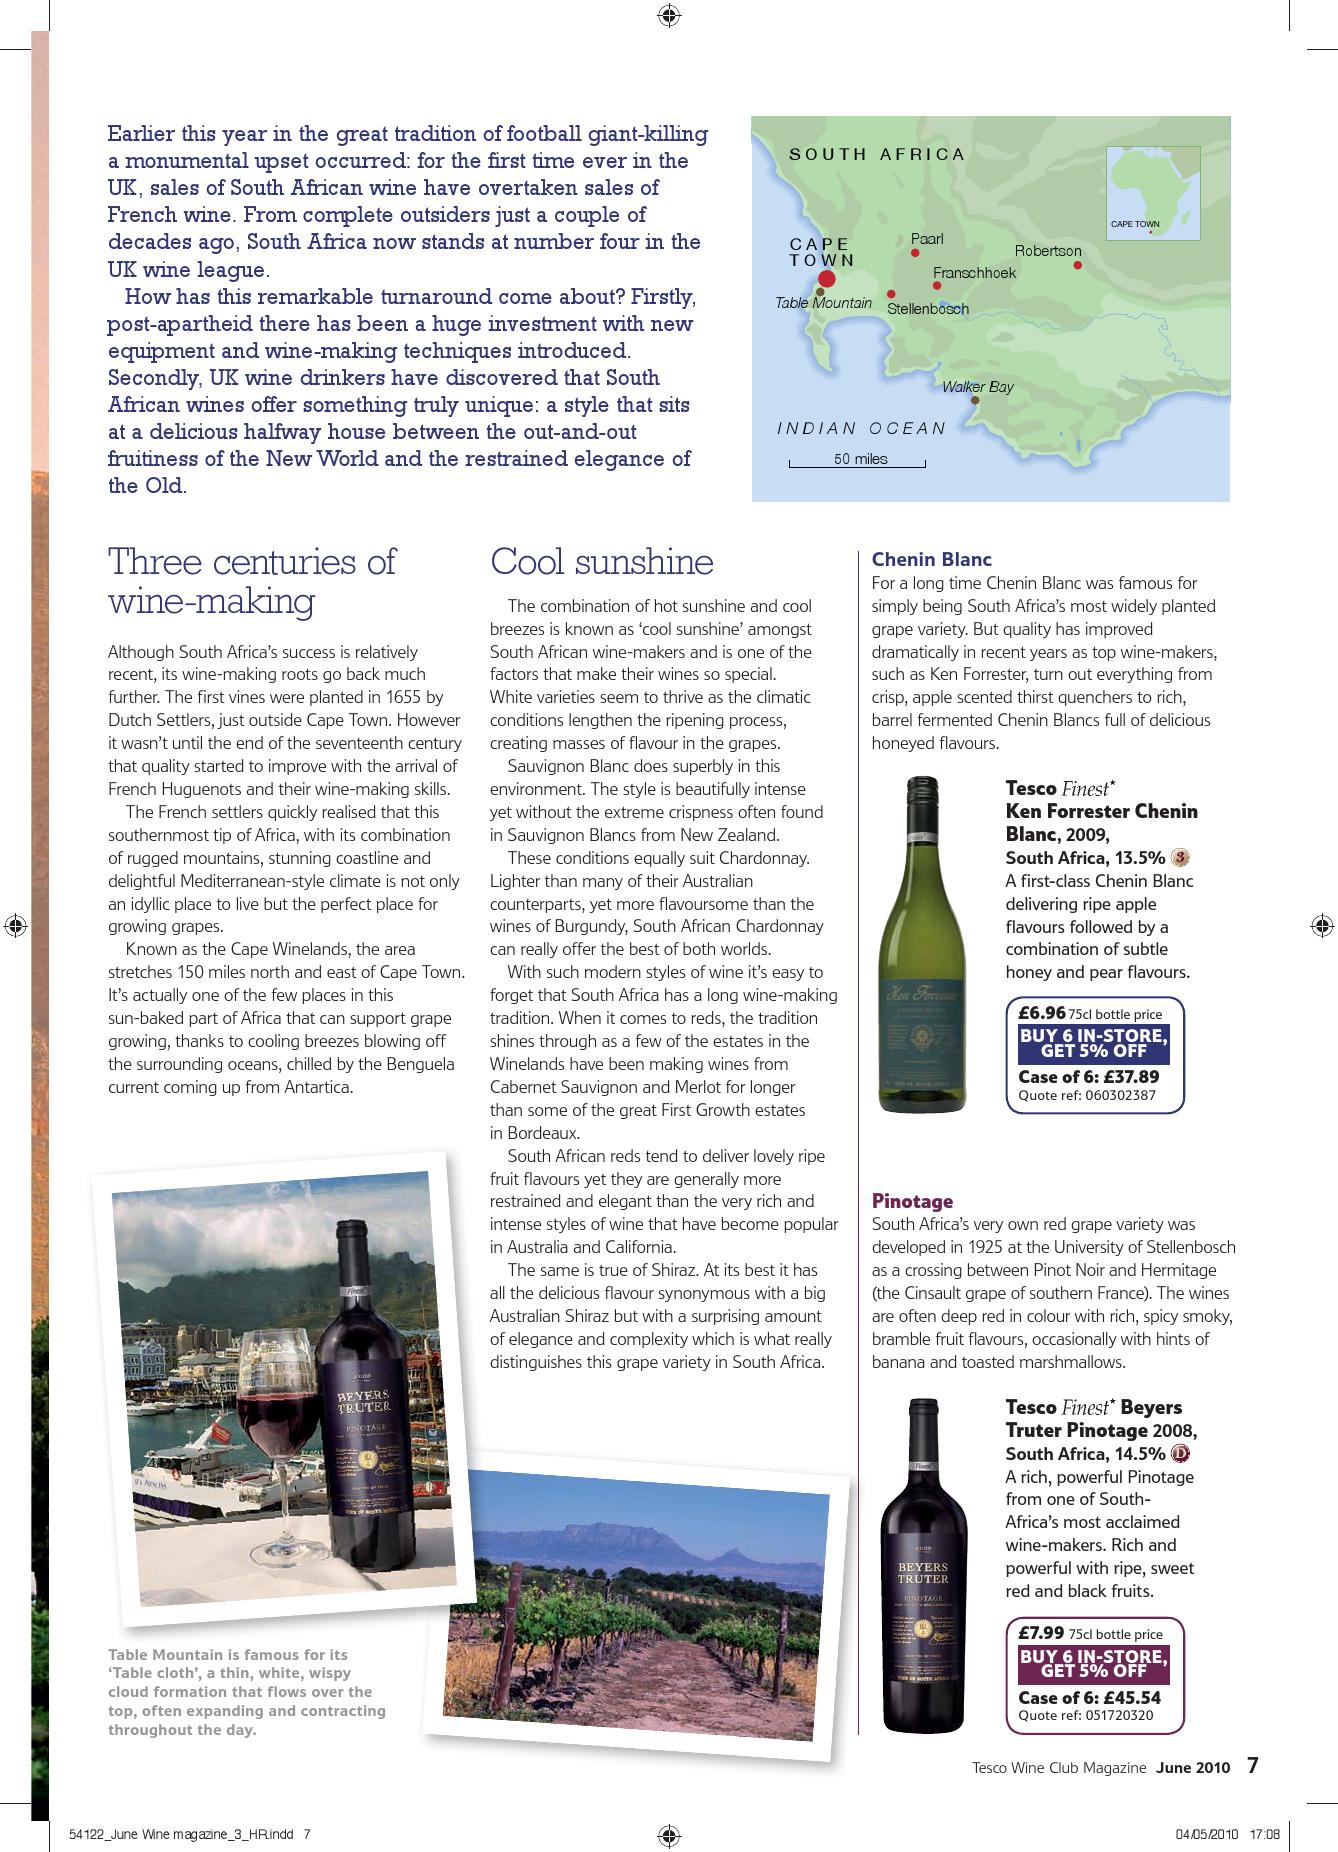 Wine magazine_LR proof_FINAL_ 07.05.10_000007.jpg